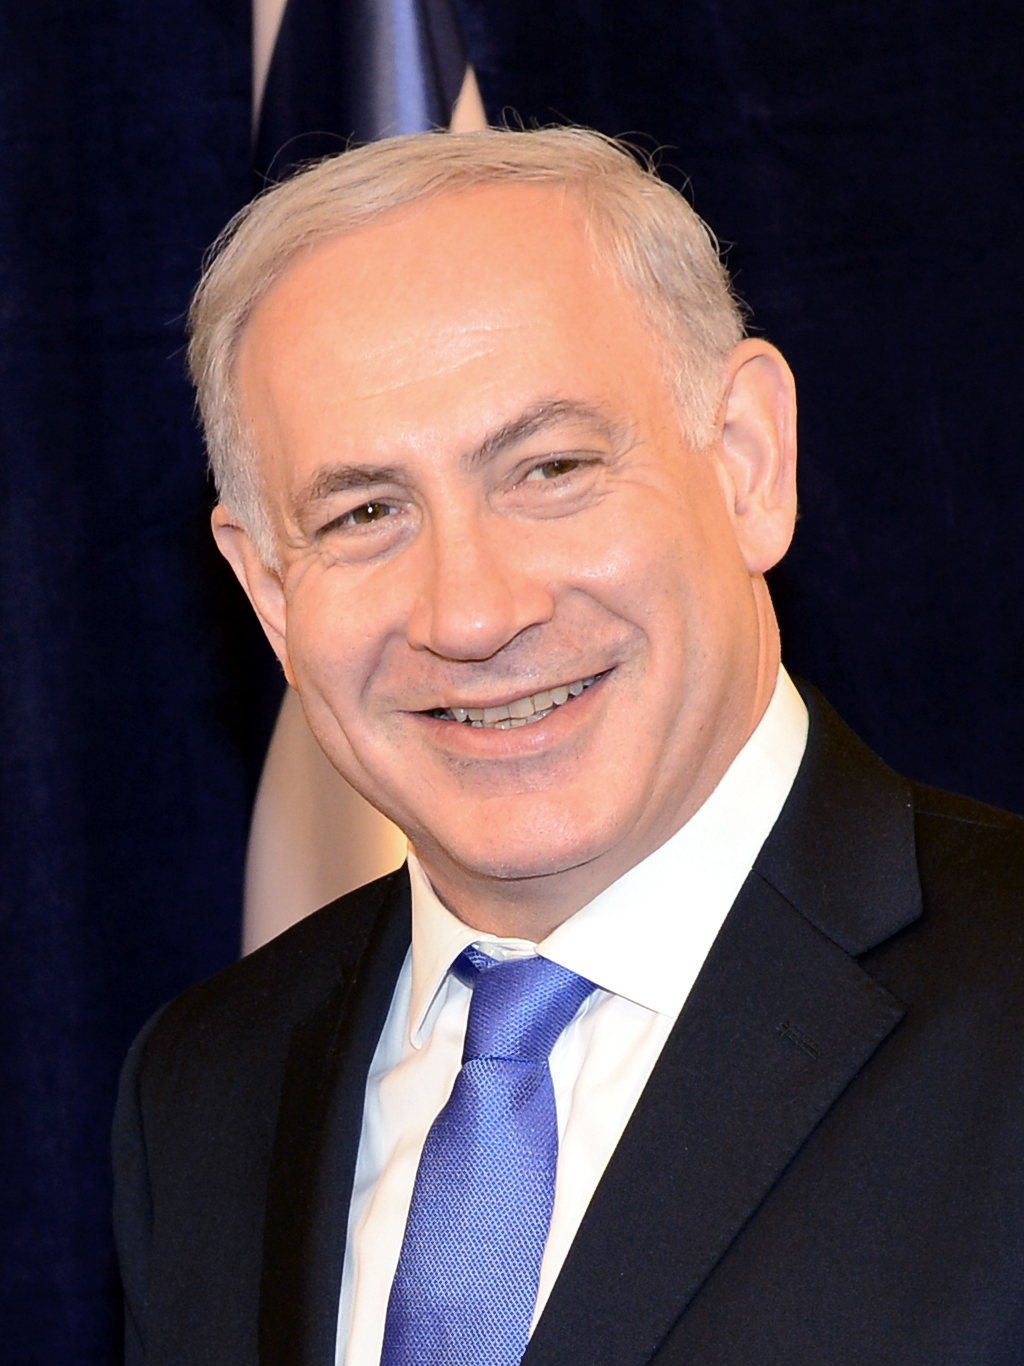 Benjamin_Netanyahu_2012.jpg